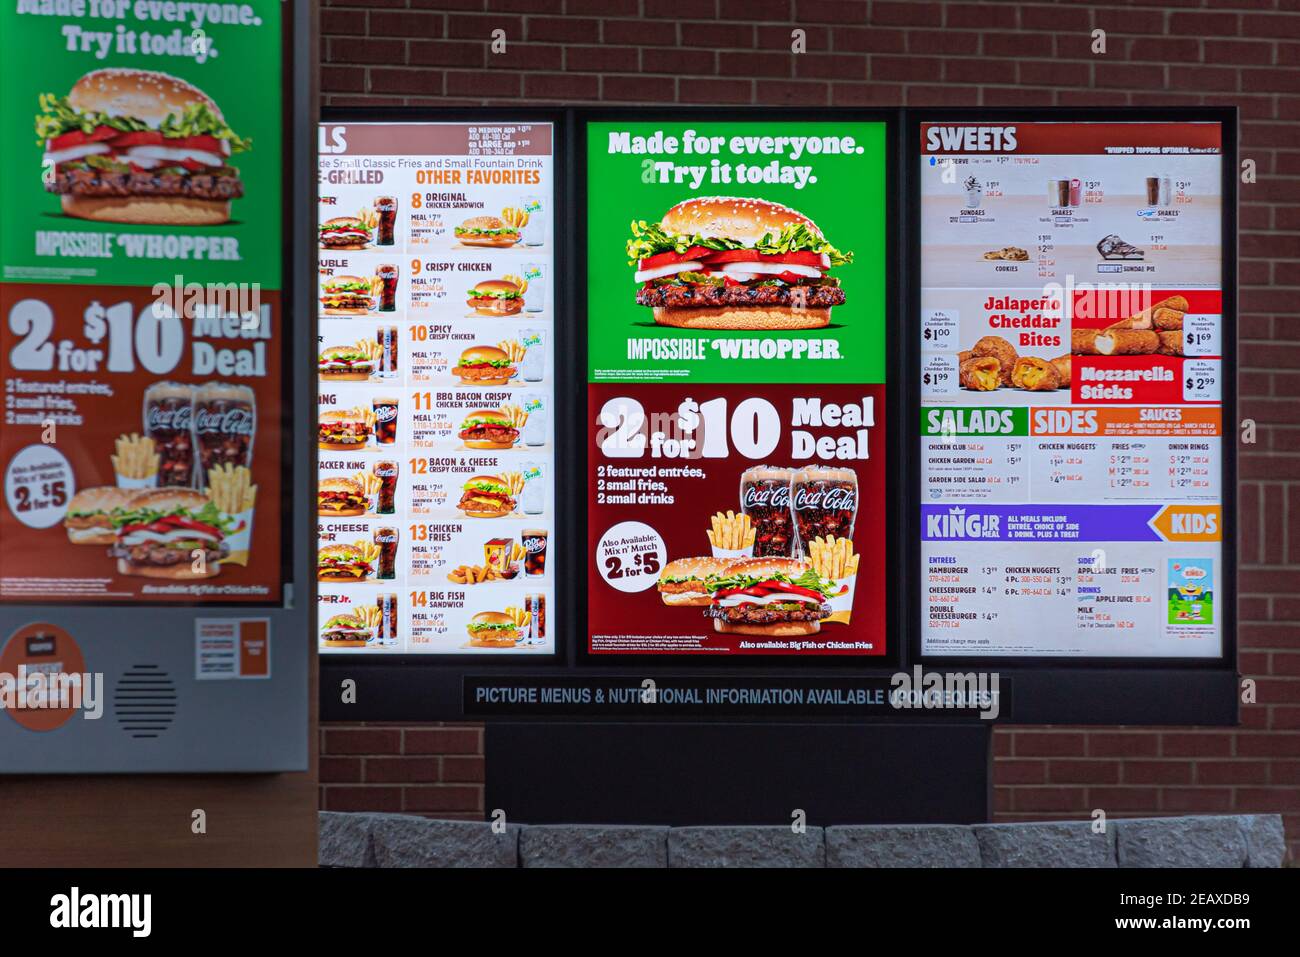 Burger King menu drive-thru tavole con pianta-based Impossible Whopper. (STATI UNITI) Foto Stock